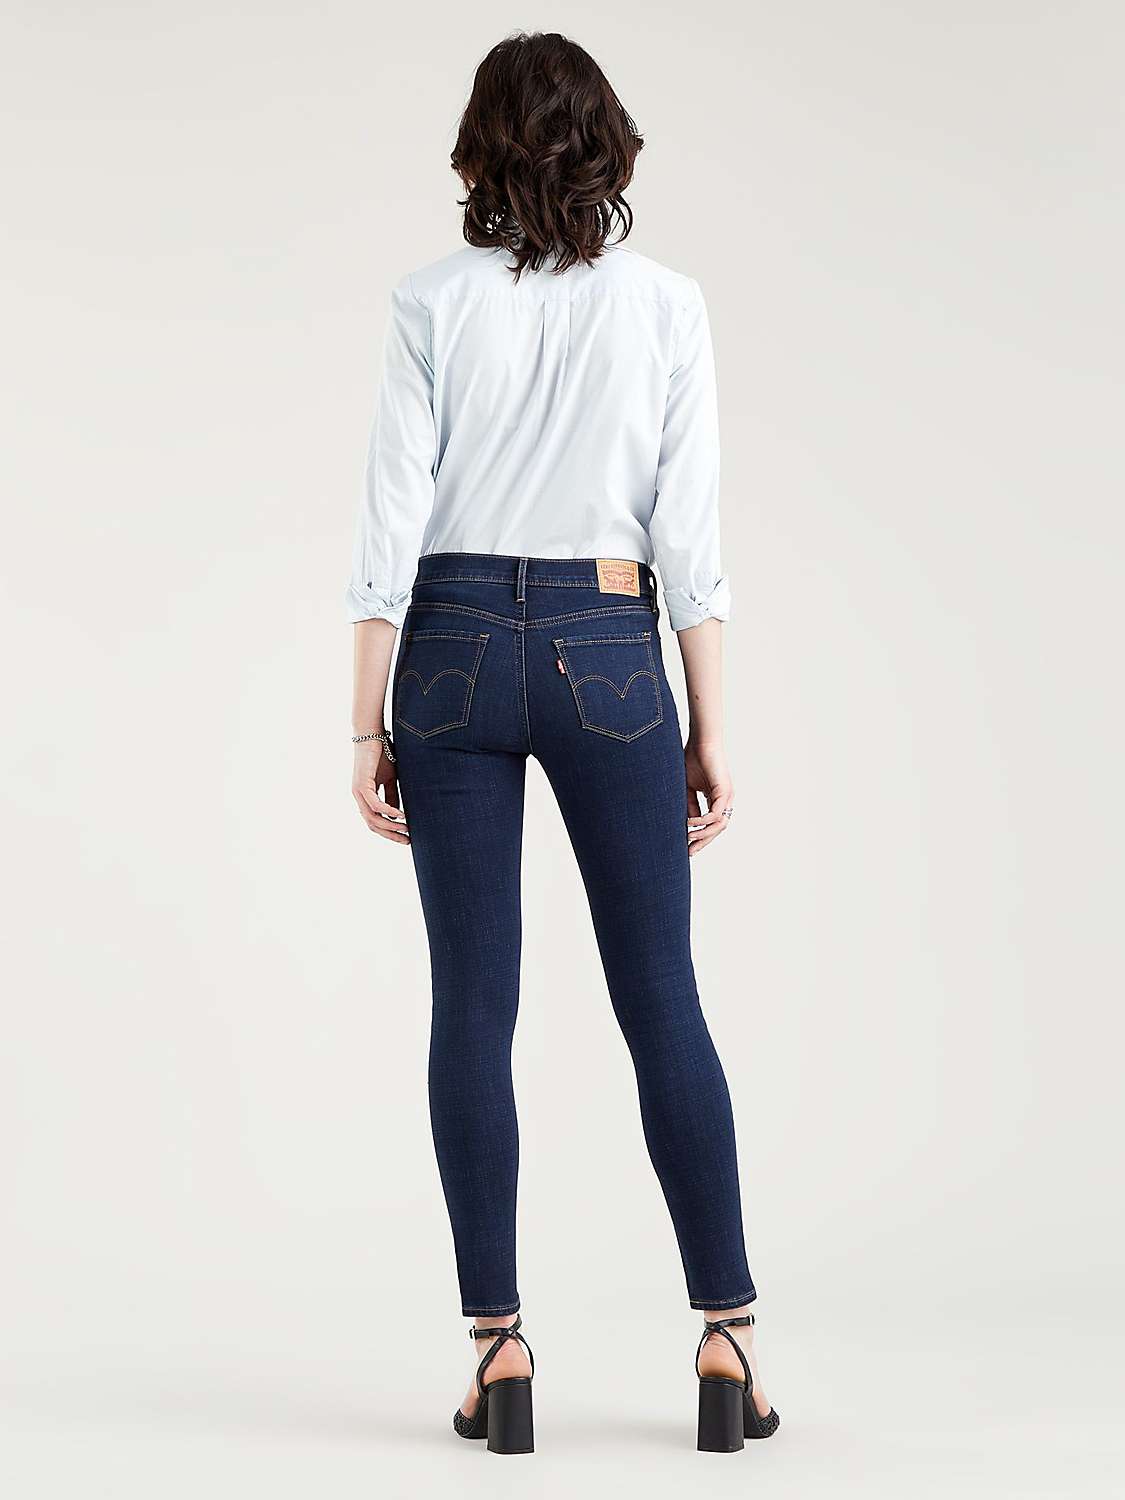 Buy Levi's 311 Shaping Skinny Jeans, Cobalt Rebel Online at johnlewis.com